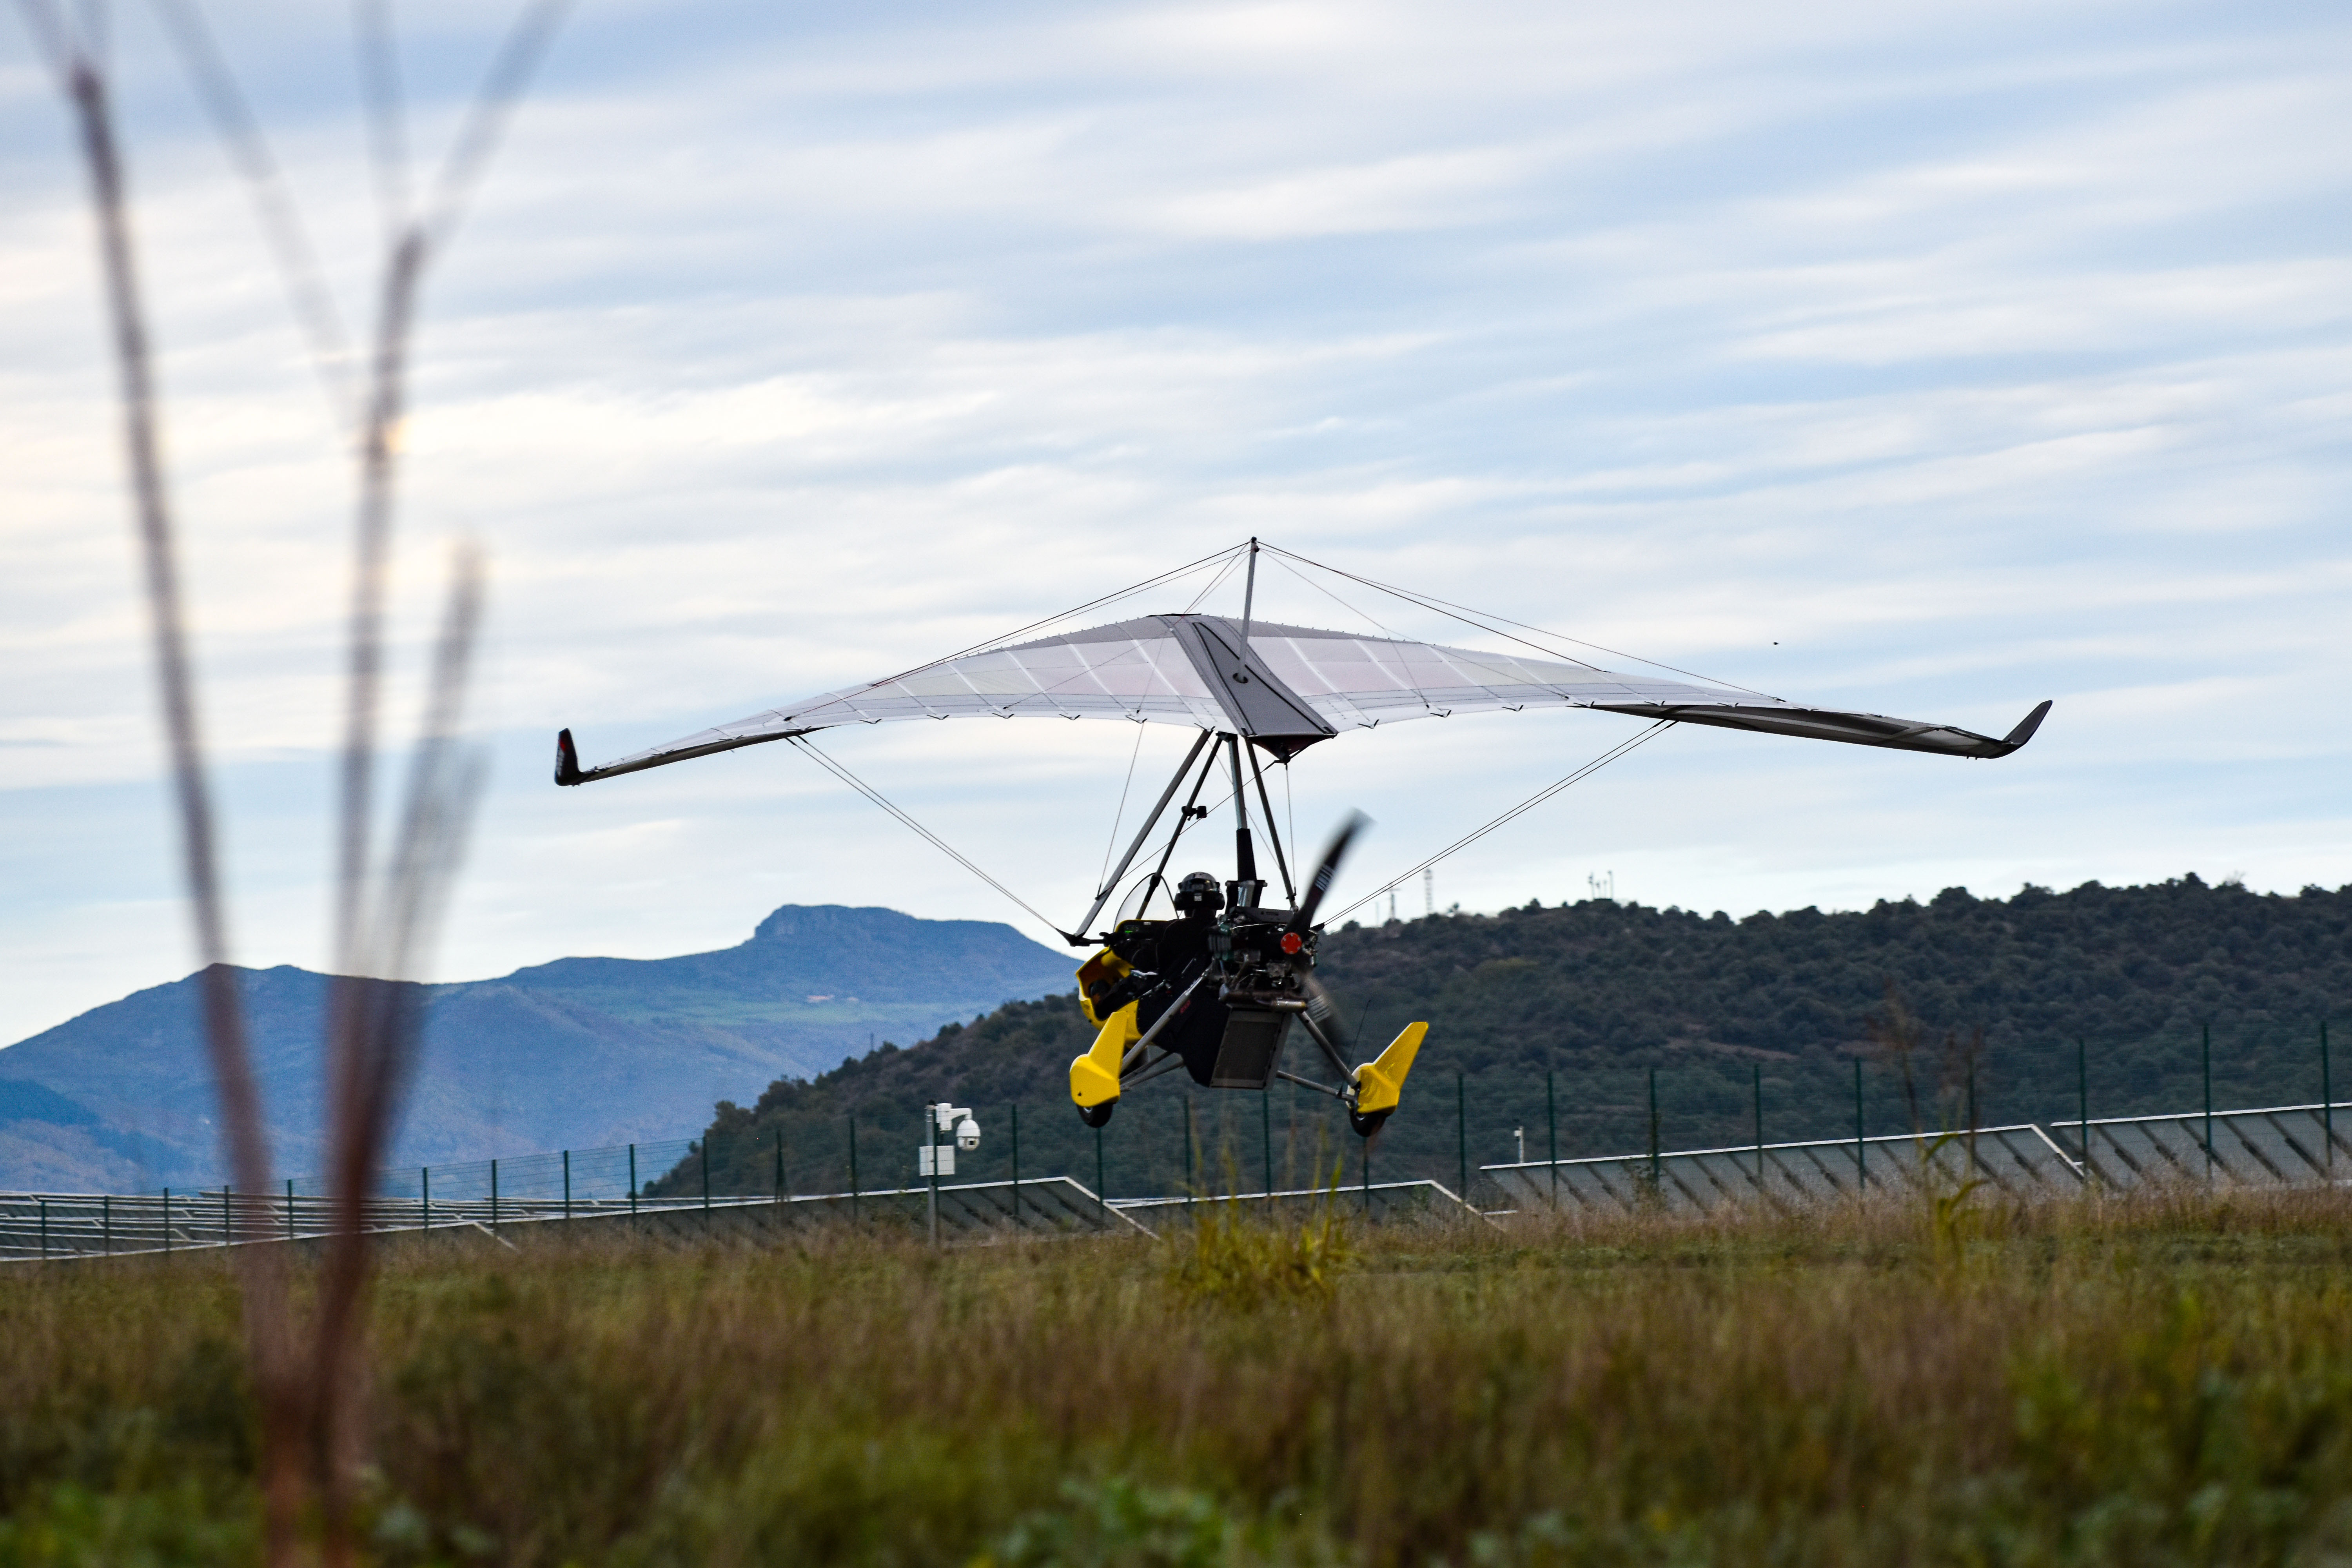 fly/en-vol-bionix2-skypper-evo-en-vol-in-fly-ulm-pendulaire-ultralight-trike-wings-7.jpg